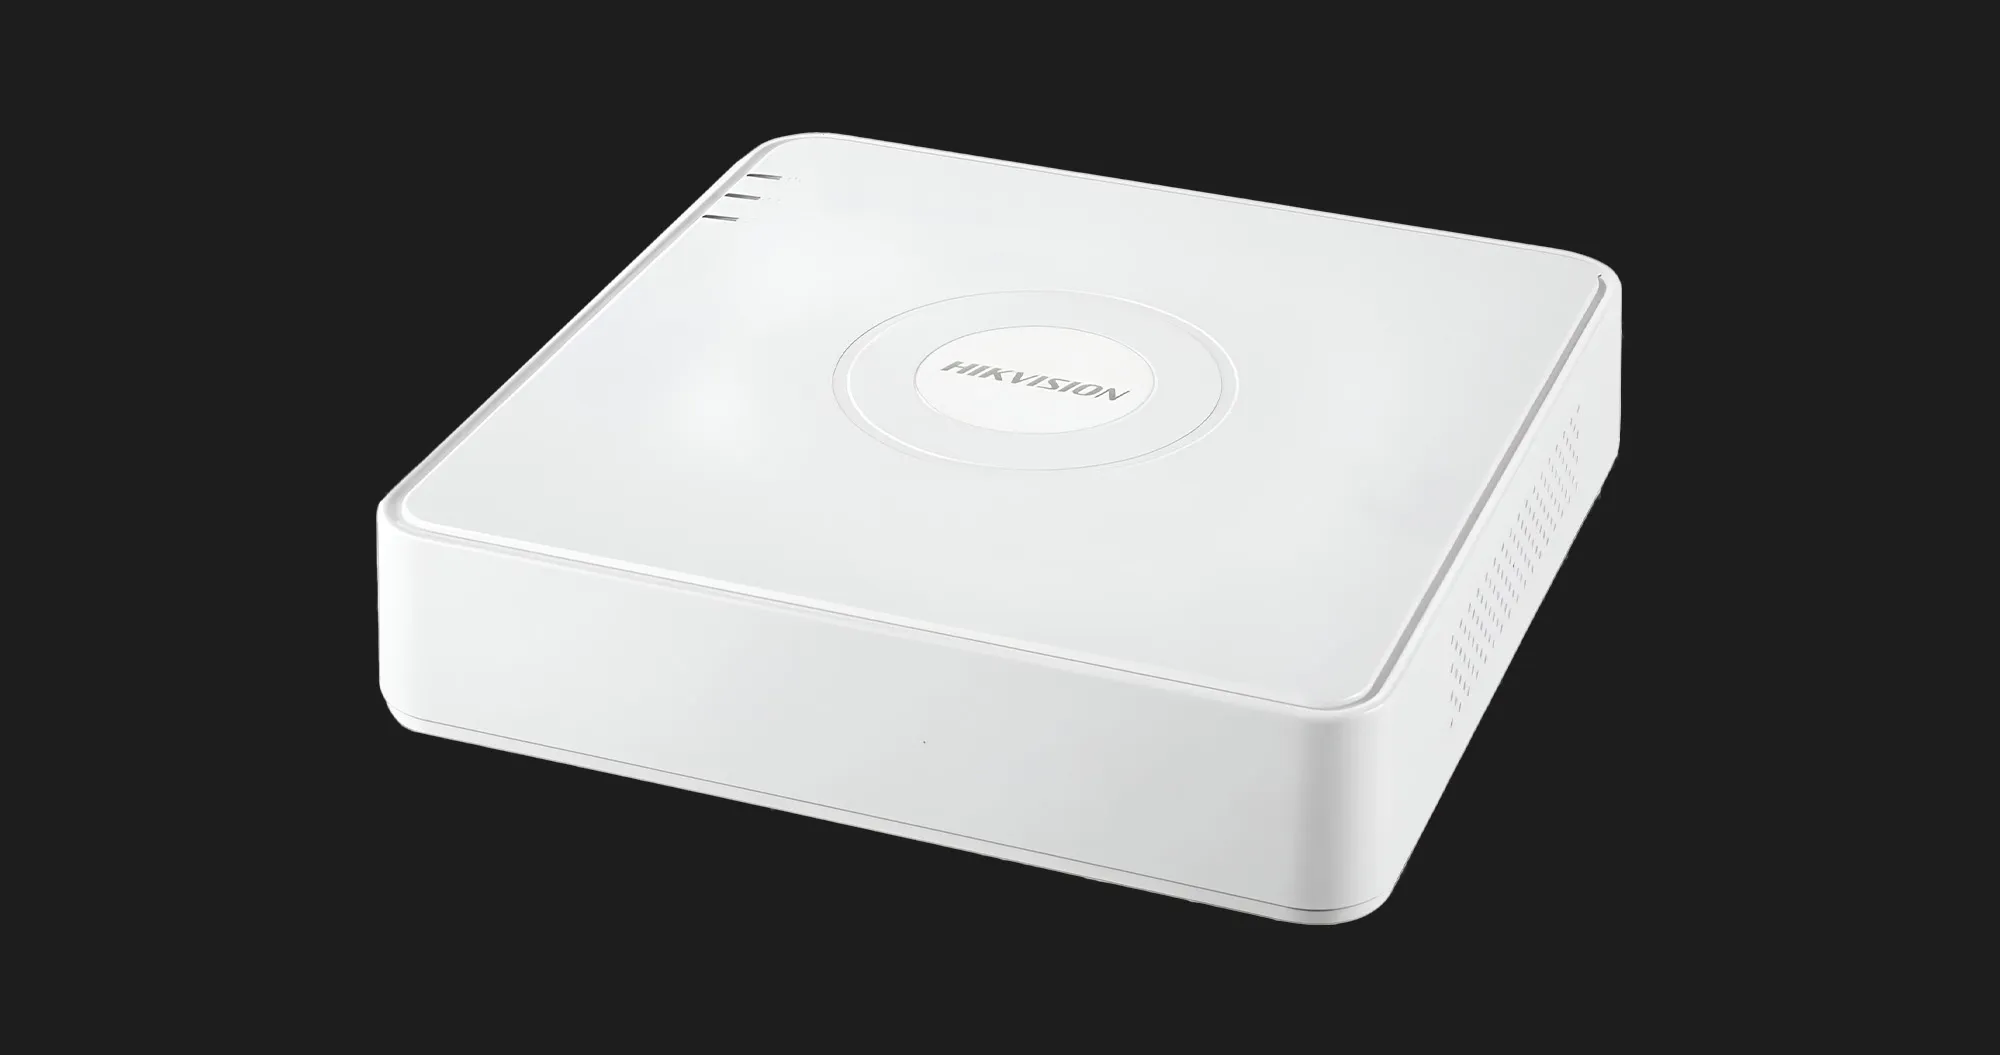 Відеореєстратор Hikvision DS-7108NI-Q1(D) (White)